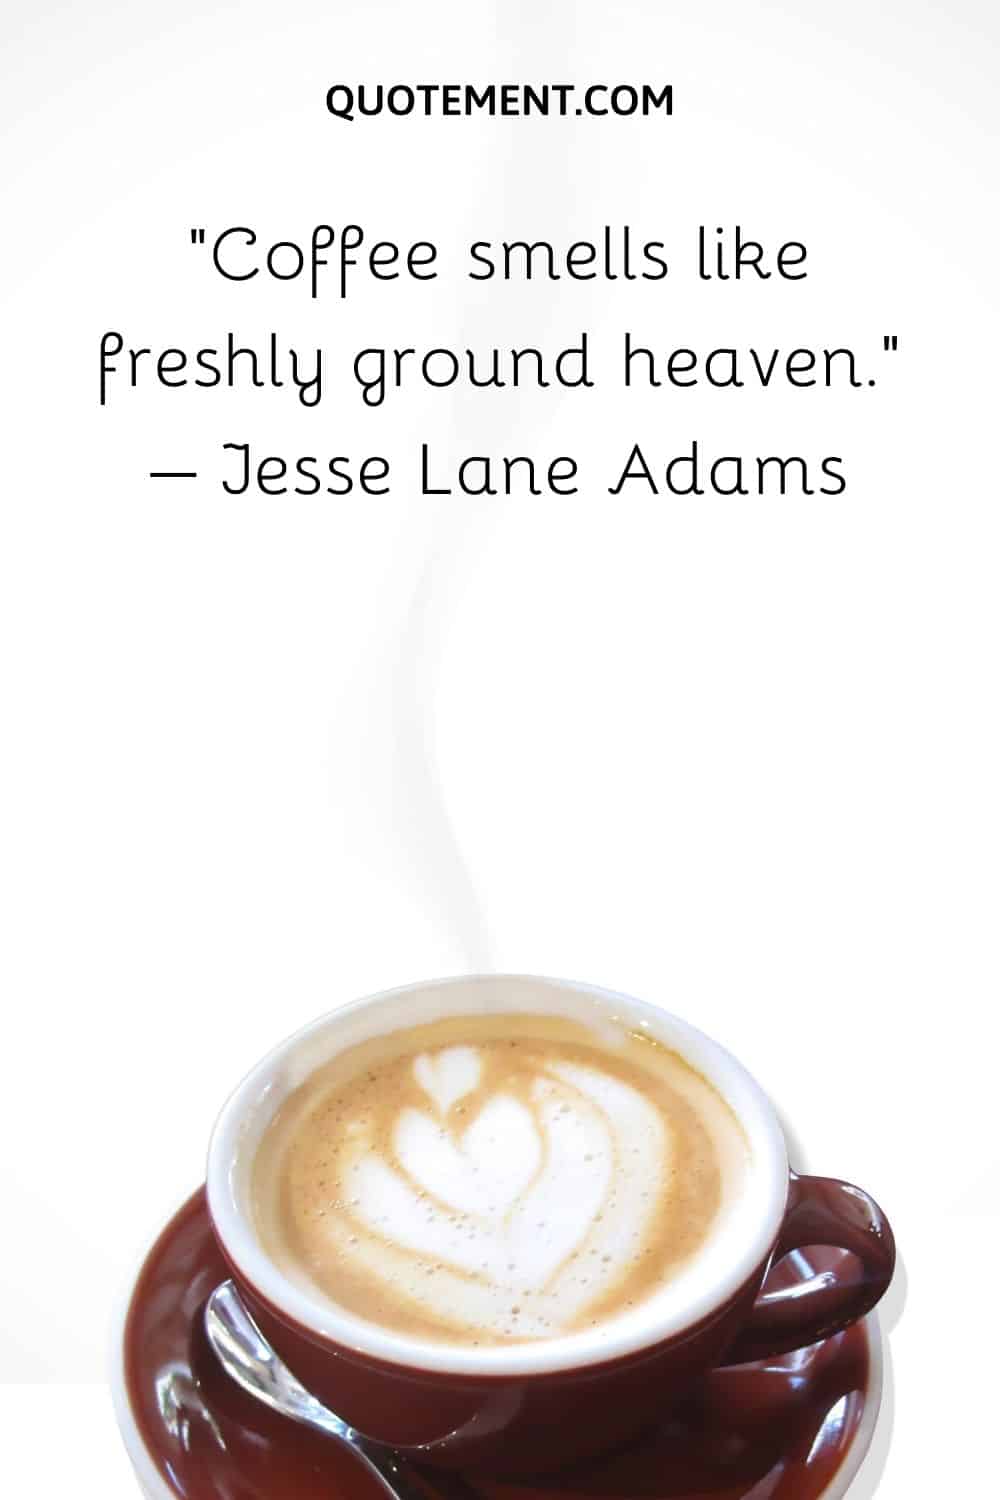 Coffee smells like freshly ground heaven